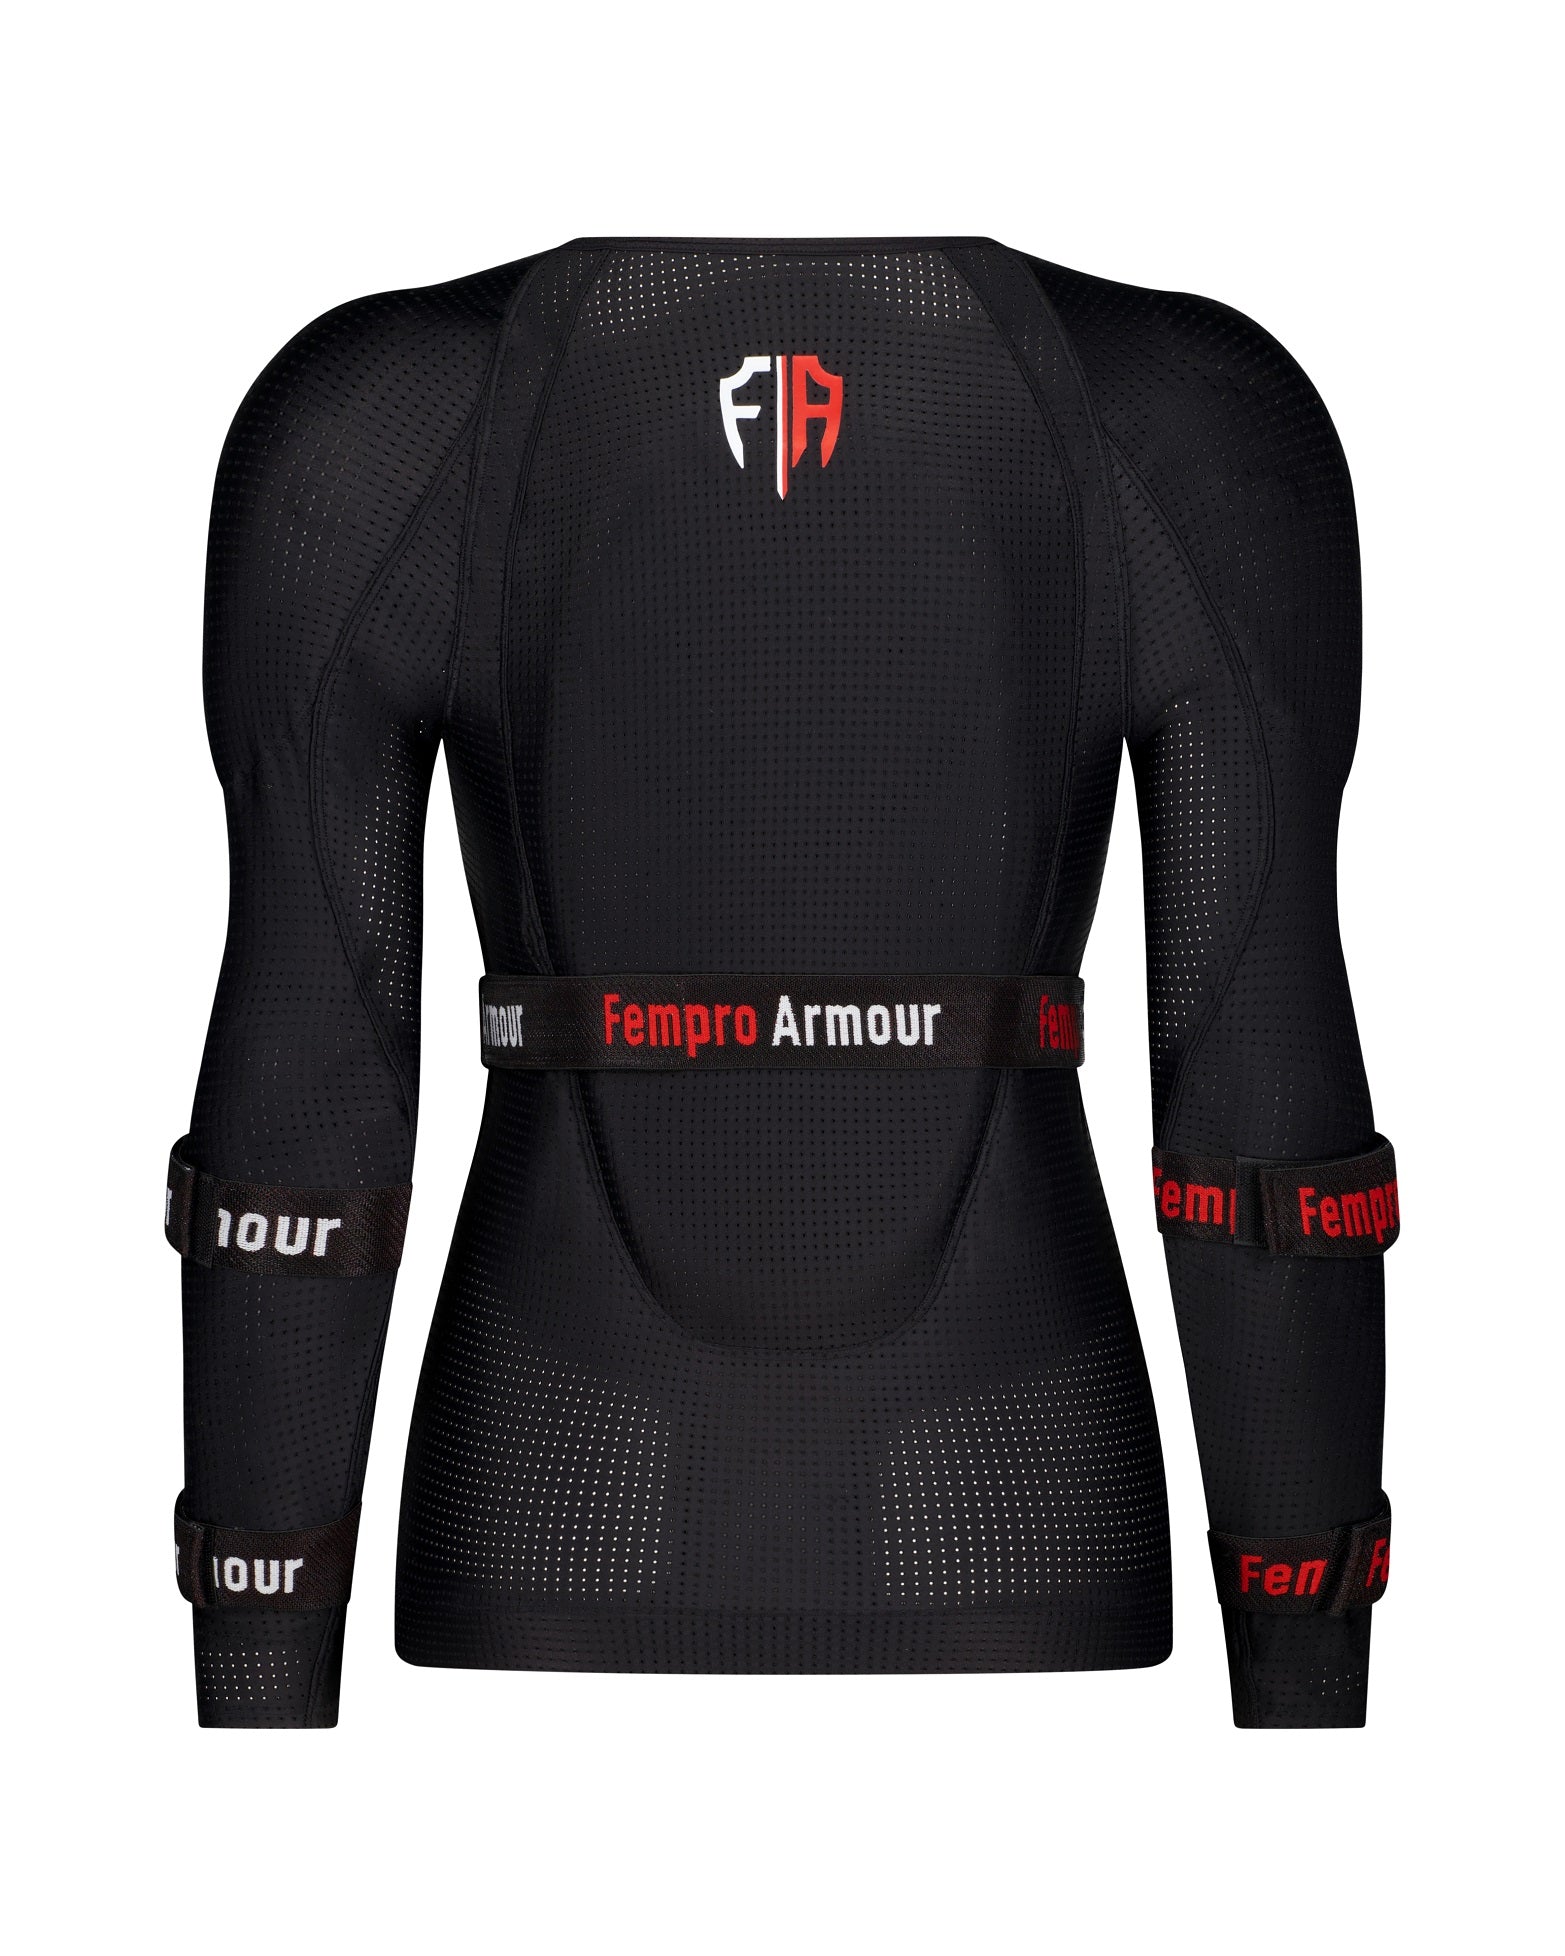 Fempro Armour - Undergarment Armour Jersey 1.1 - Summer Fabric